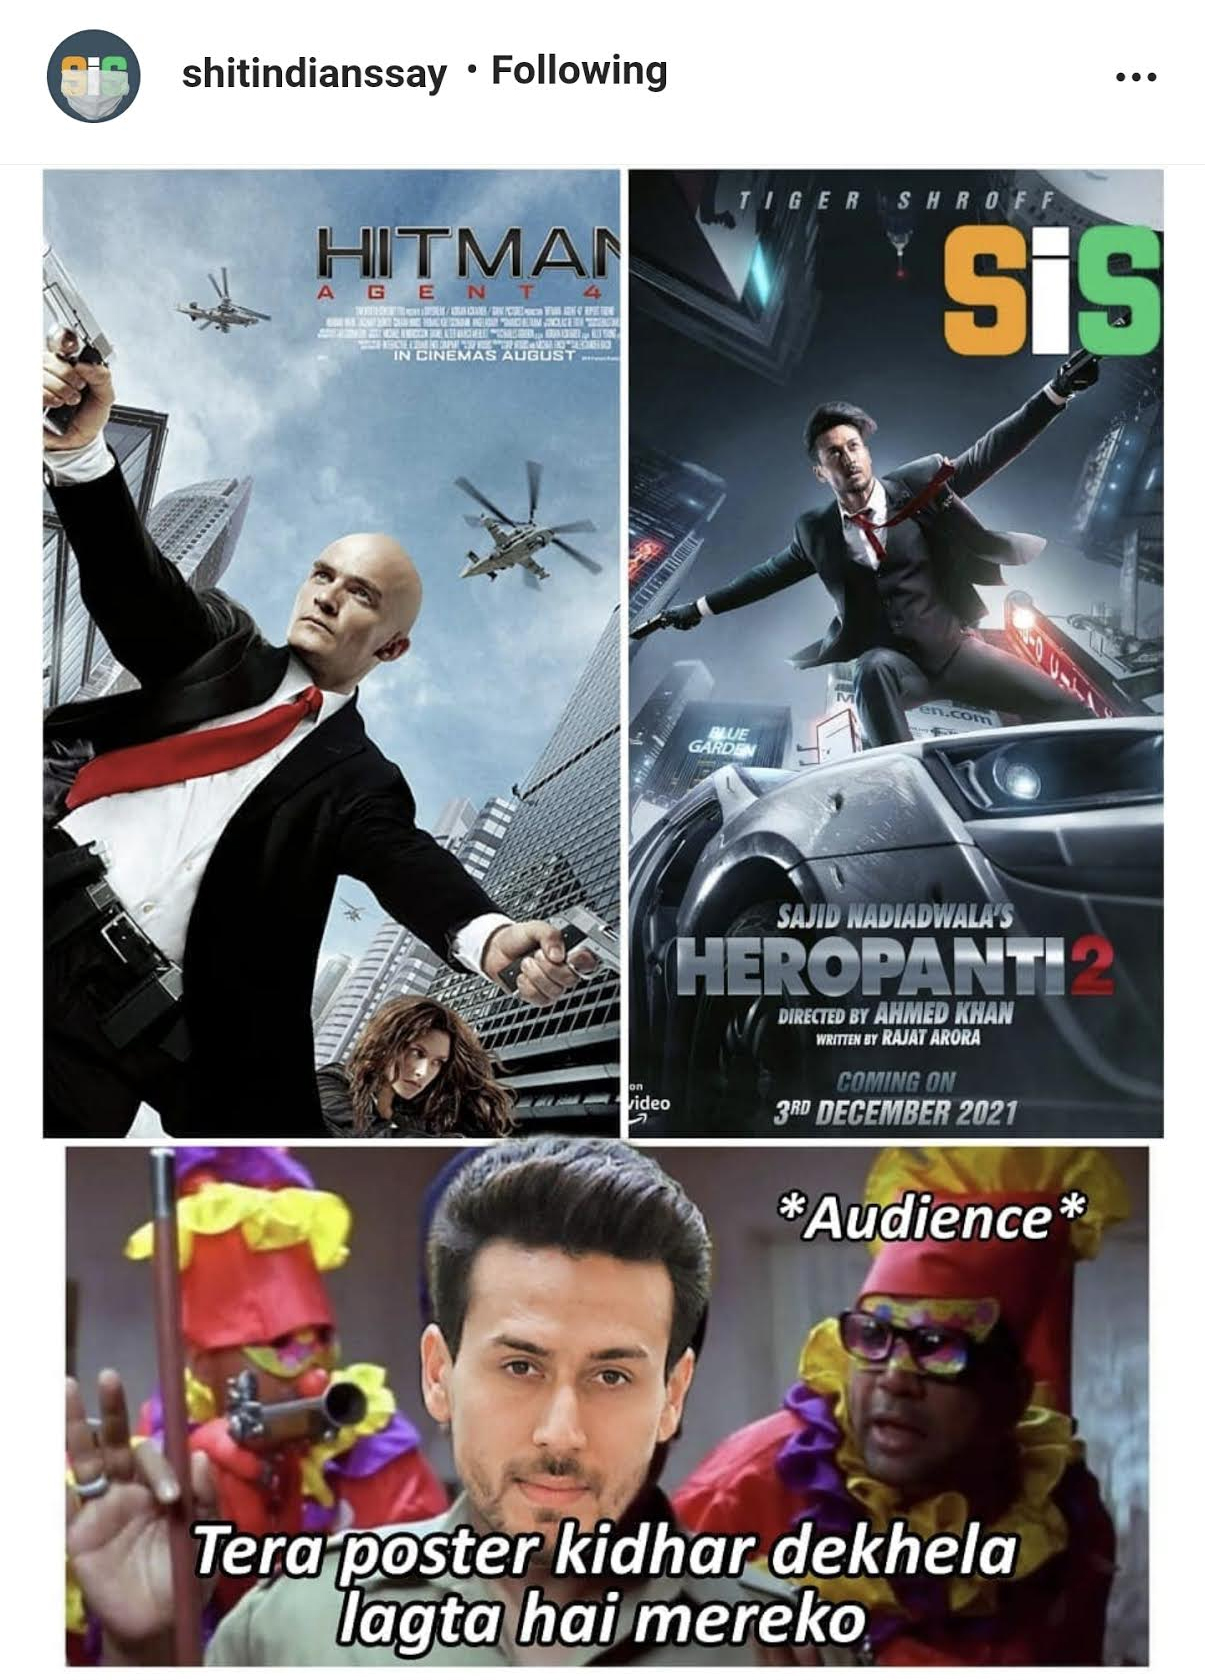 Heropanti 2 Poster Copied From Hitman Age 47 Viral Meme Shows Similarity